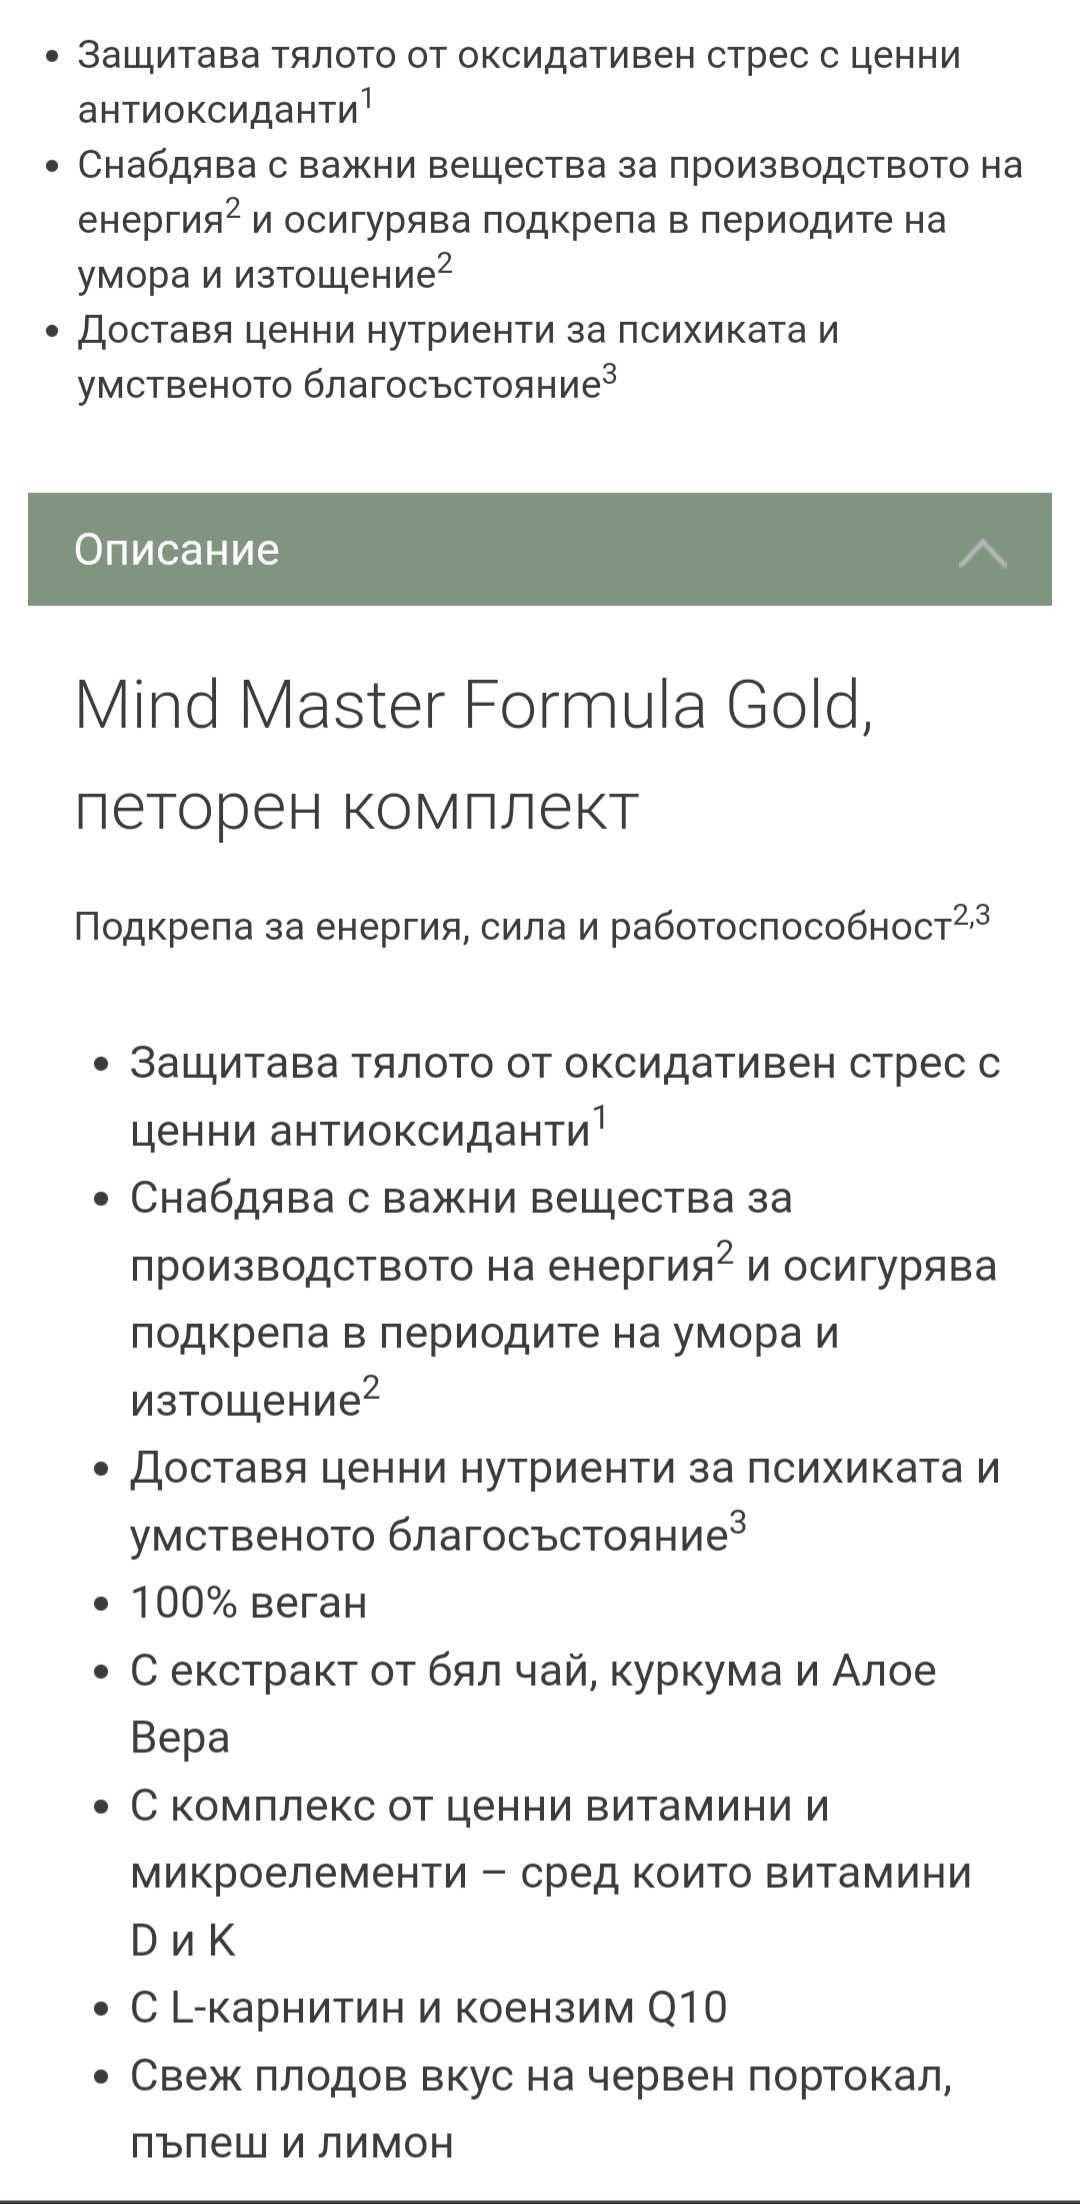 Main Master Formula Gold LR